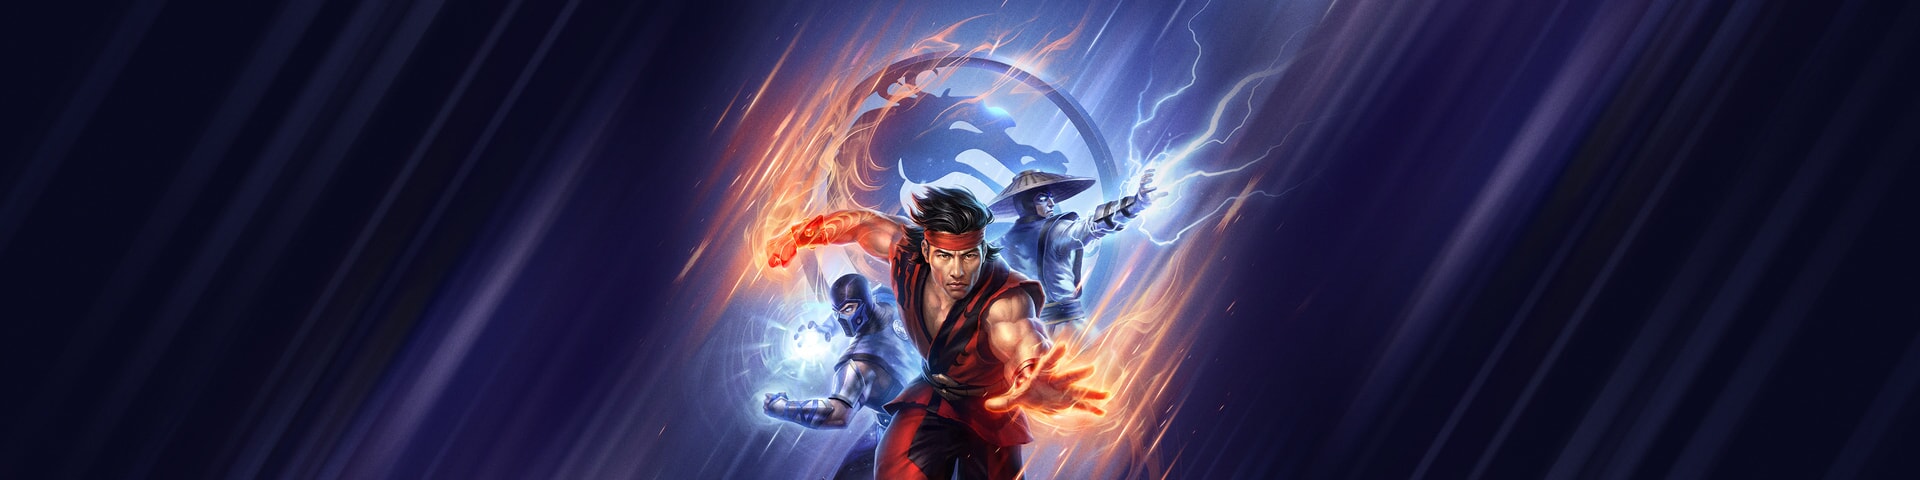 WarnerBros.com. Mortal Kombat Legends: Battle of the Realms